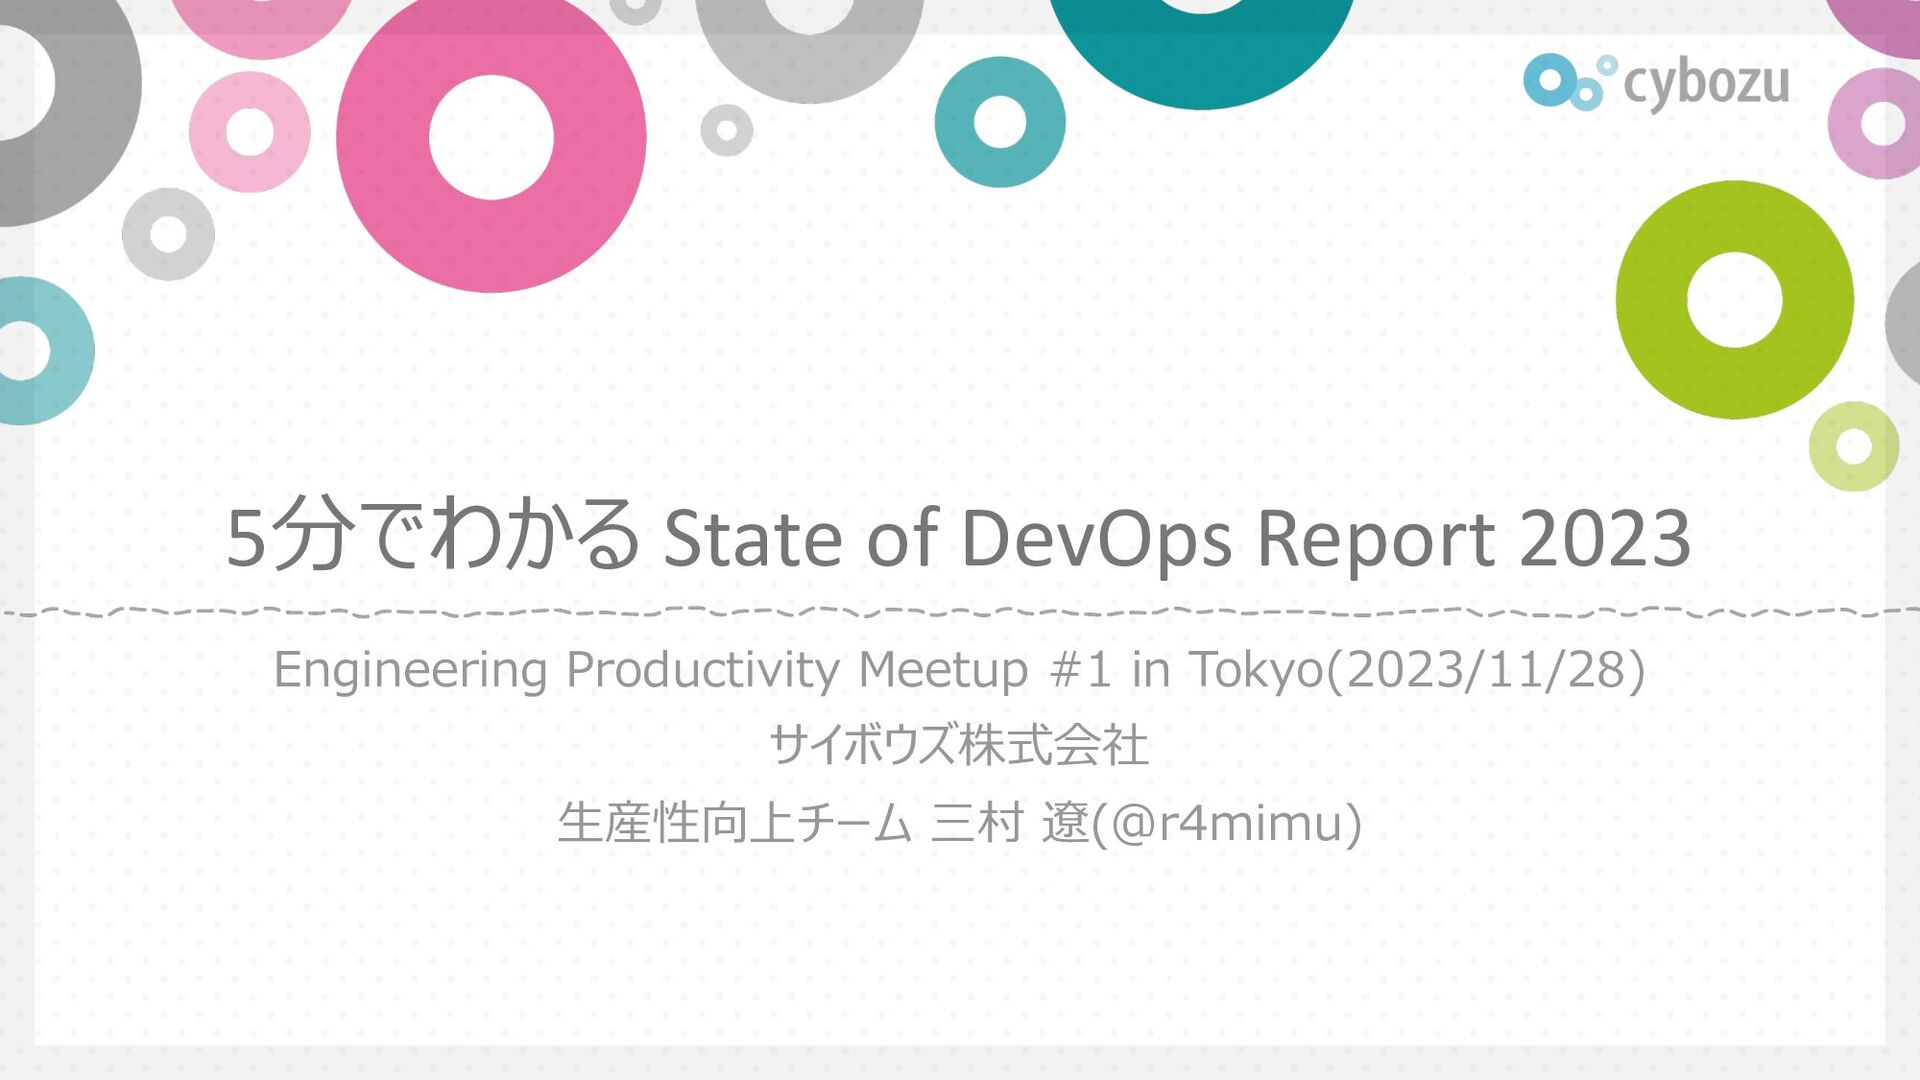 Slide Top: 5分でわかる State of DevOps Report 2023